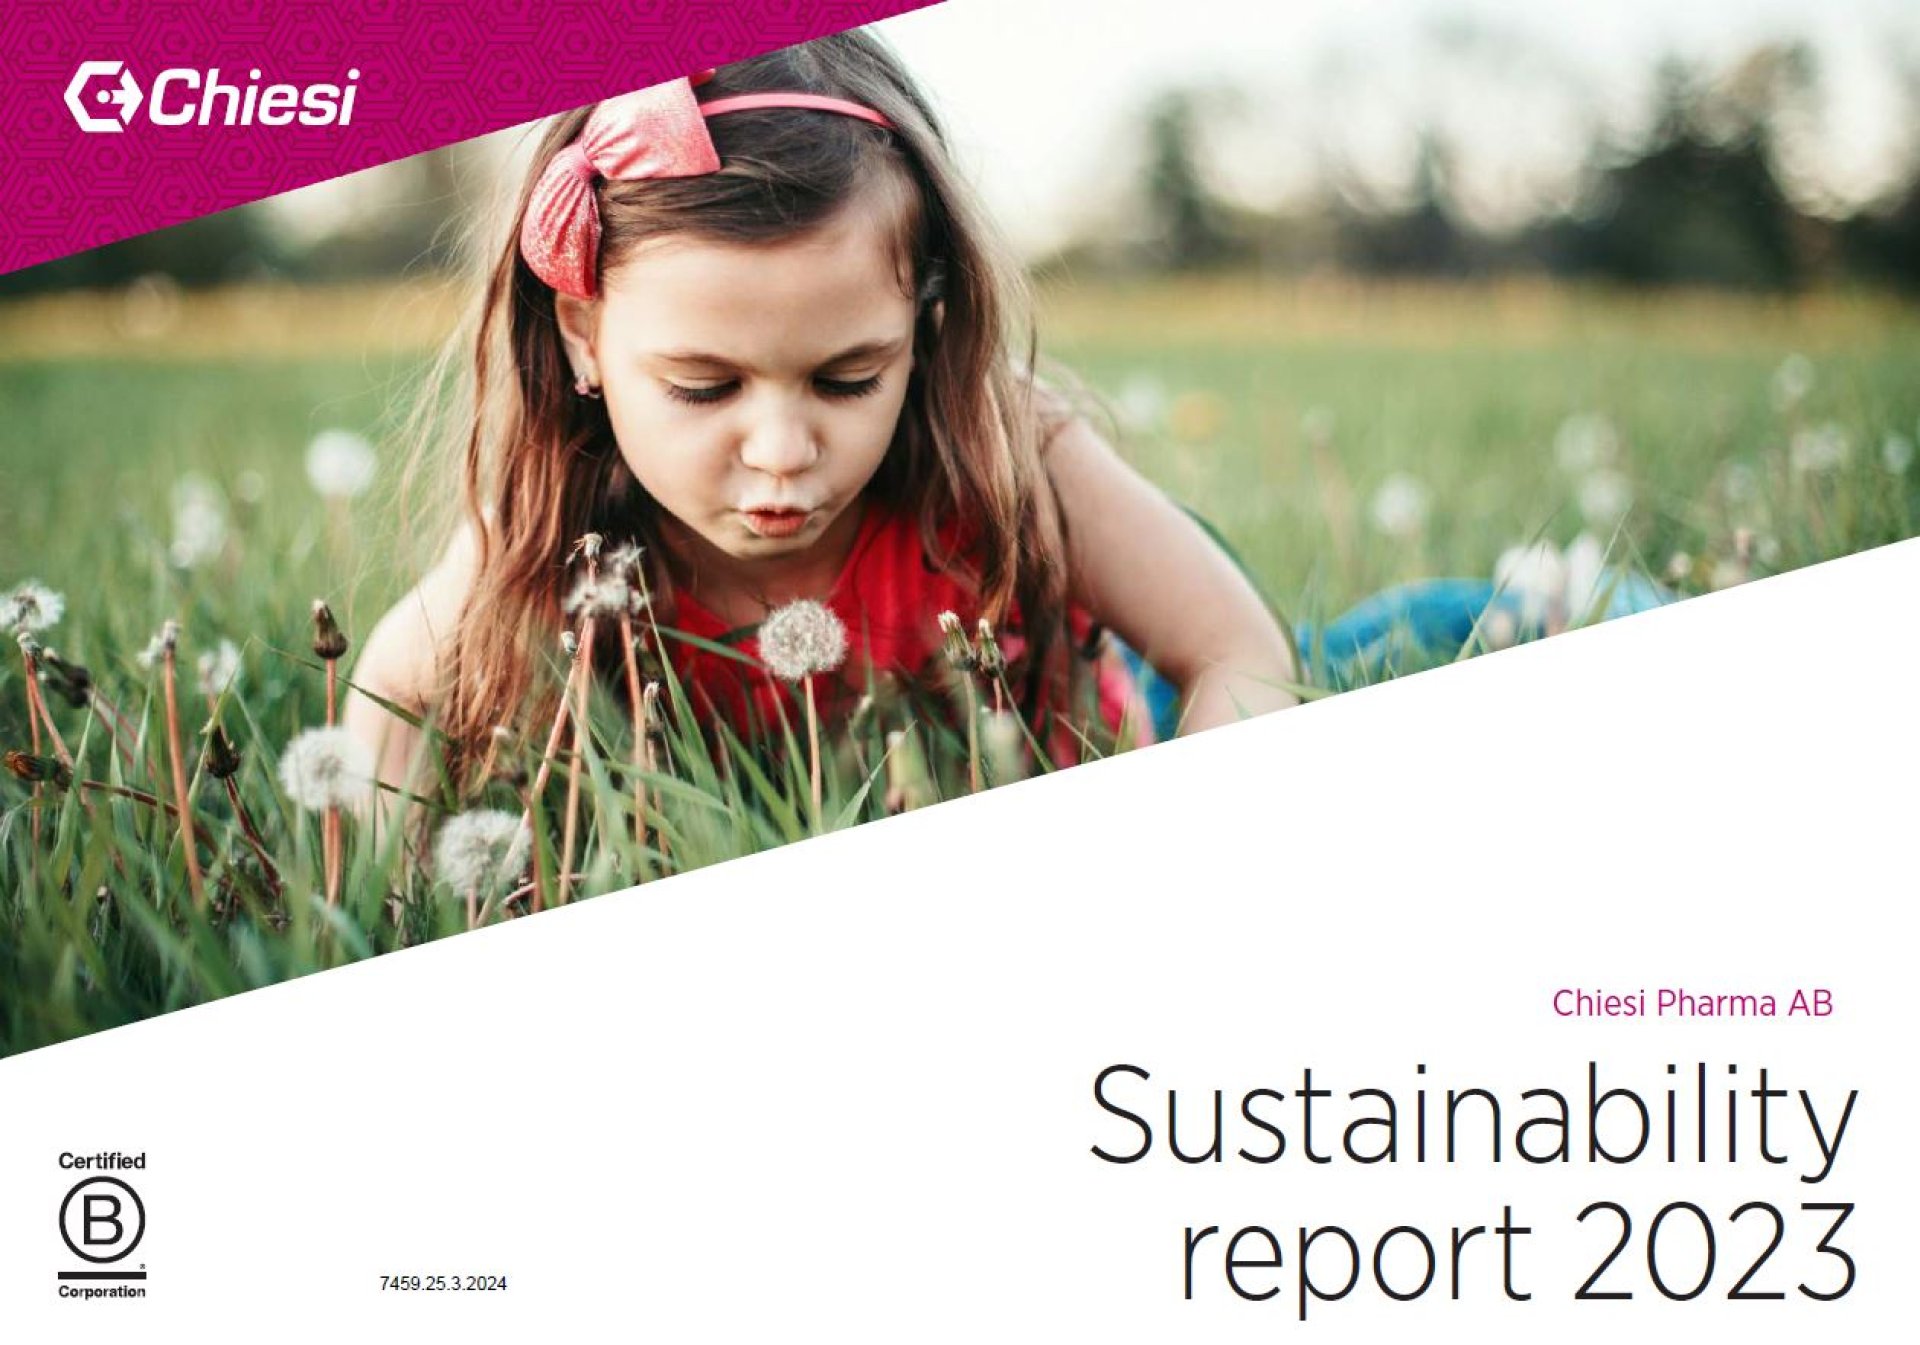 7_sustainabilityreport2023.jpg